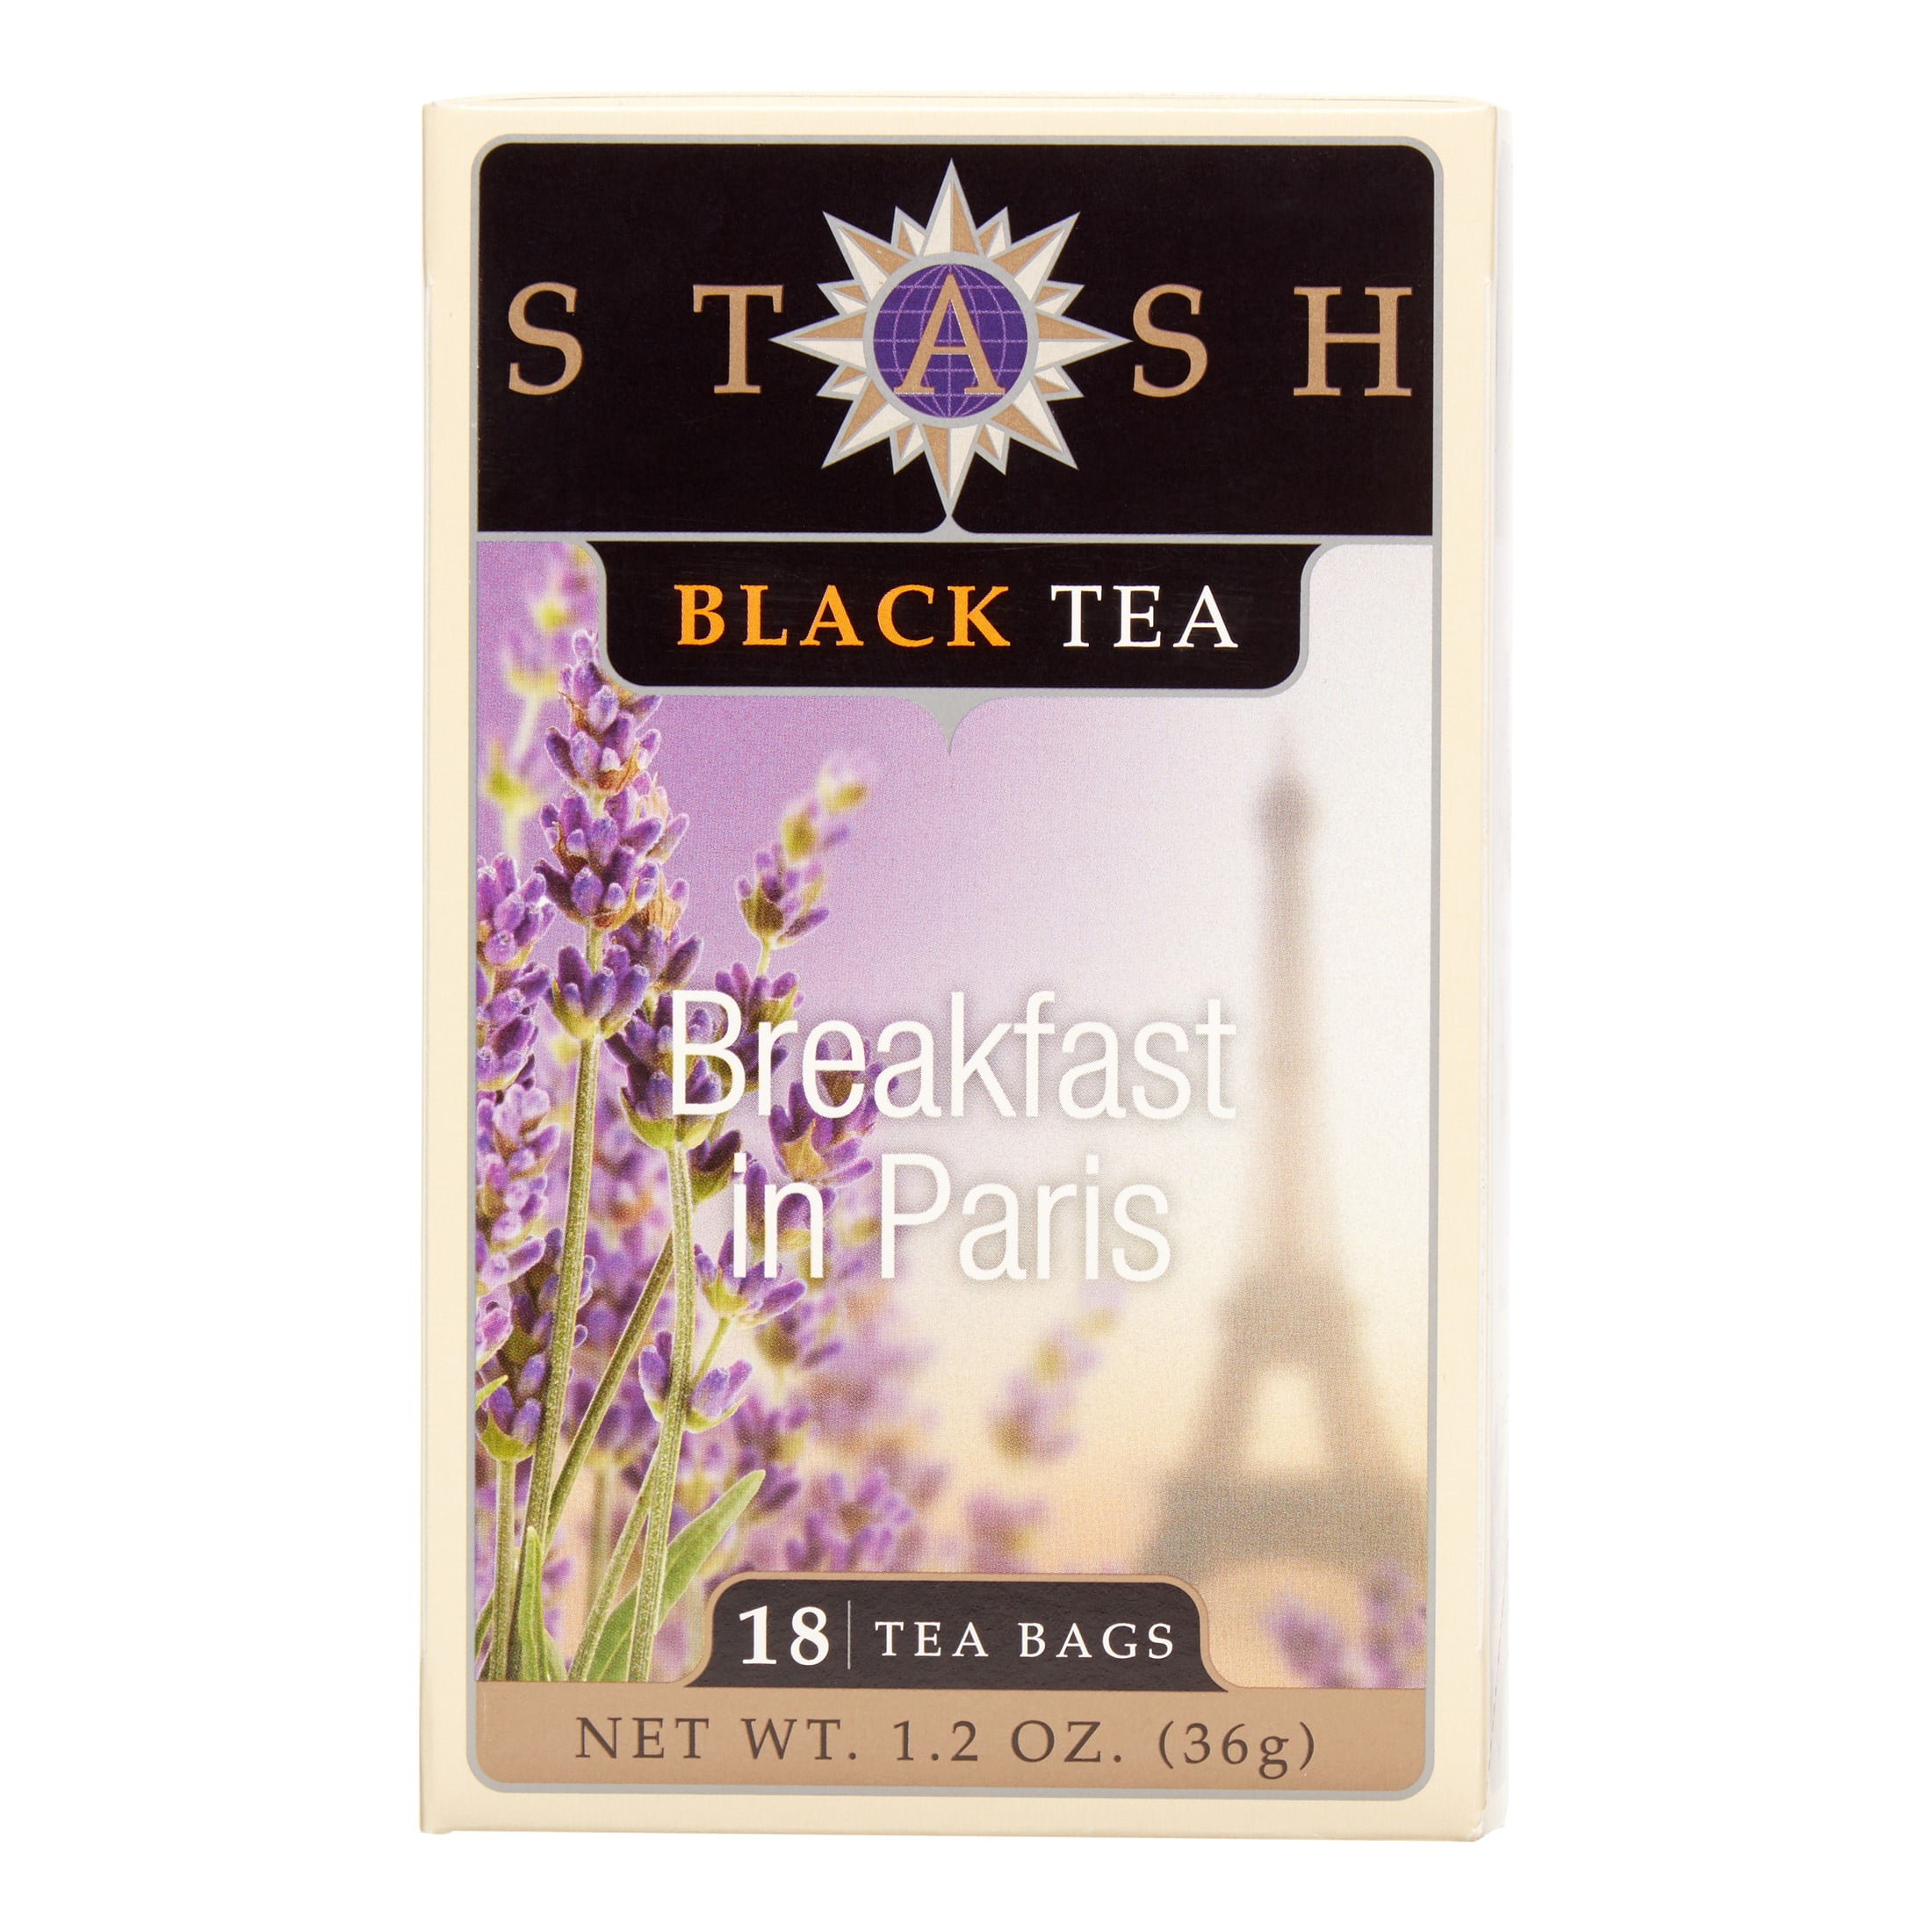 Organic Indian Black Tea, Paris Breakfast